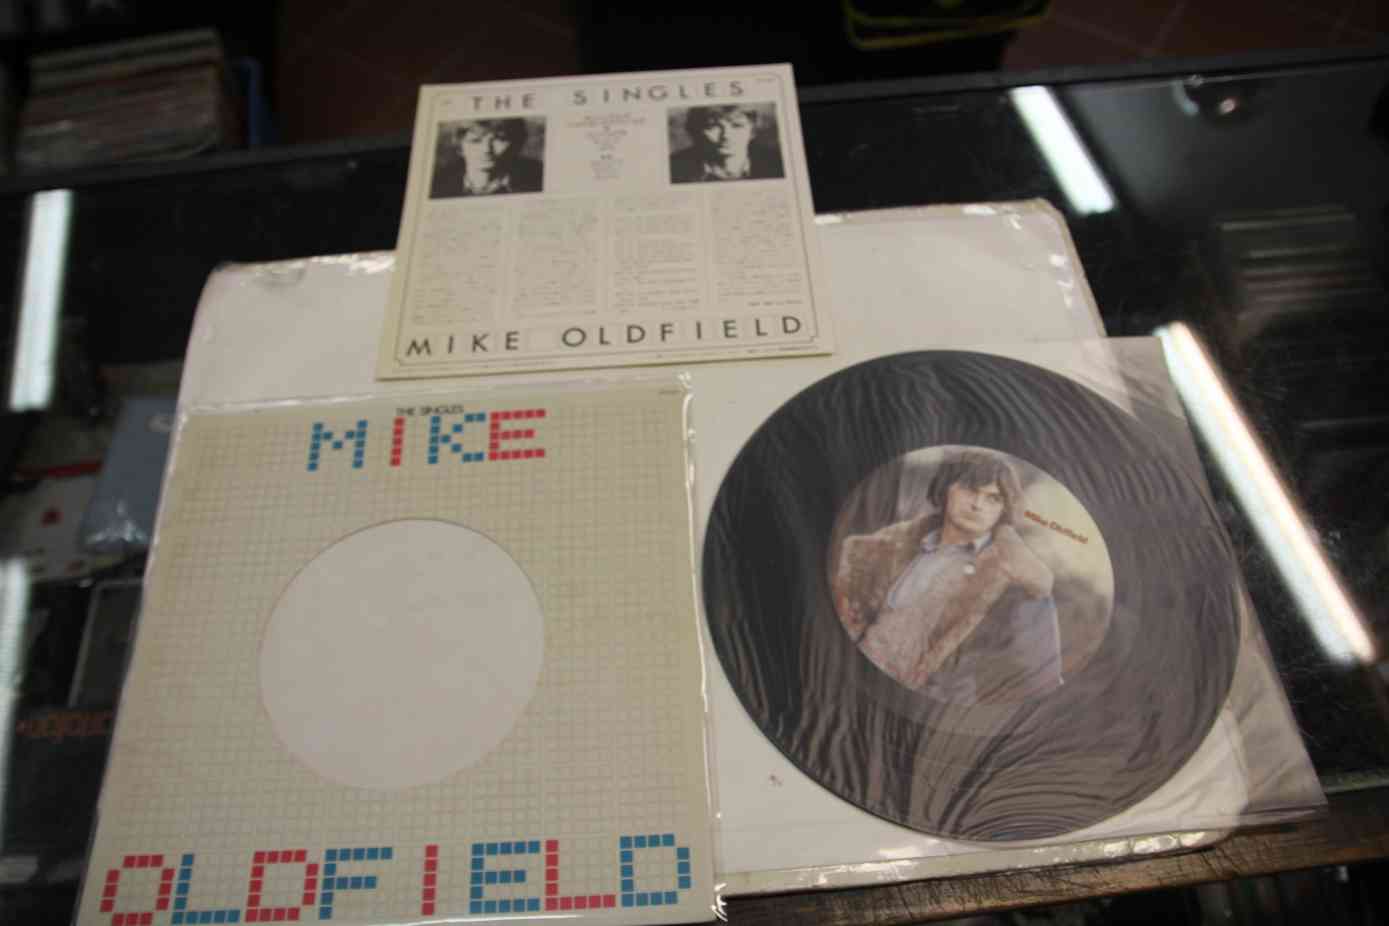 MIKE OLDFIELD - THE SINGLES - JAPAN